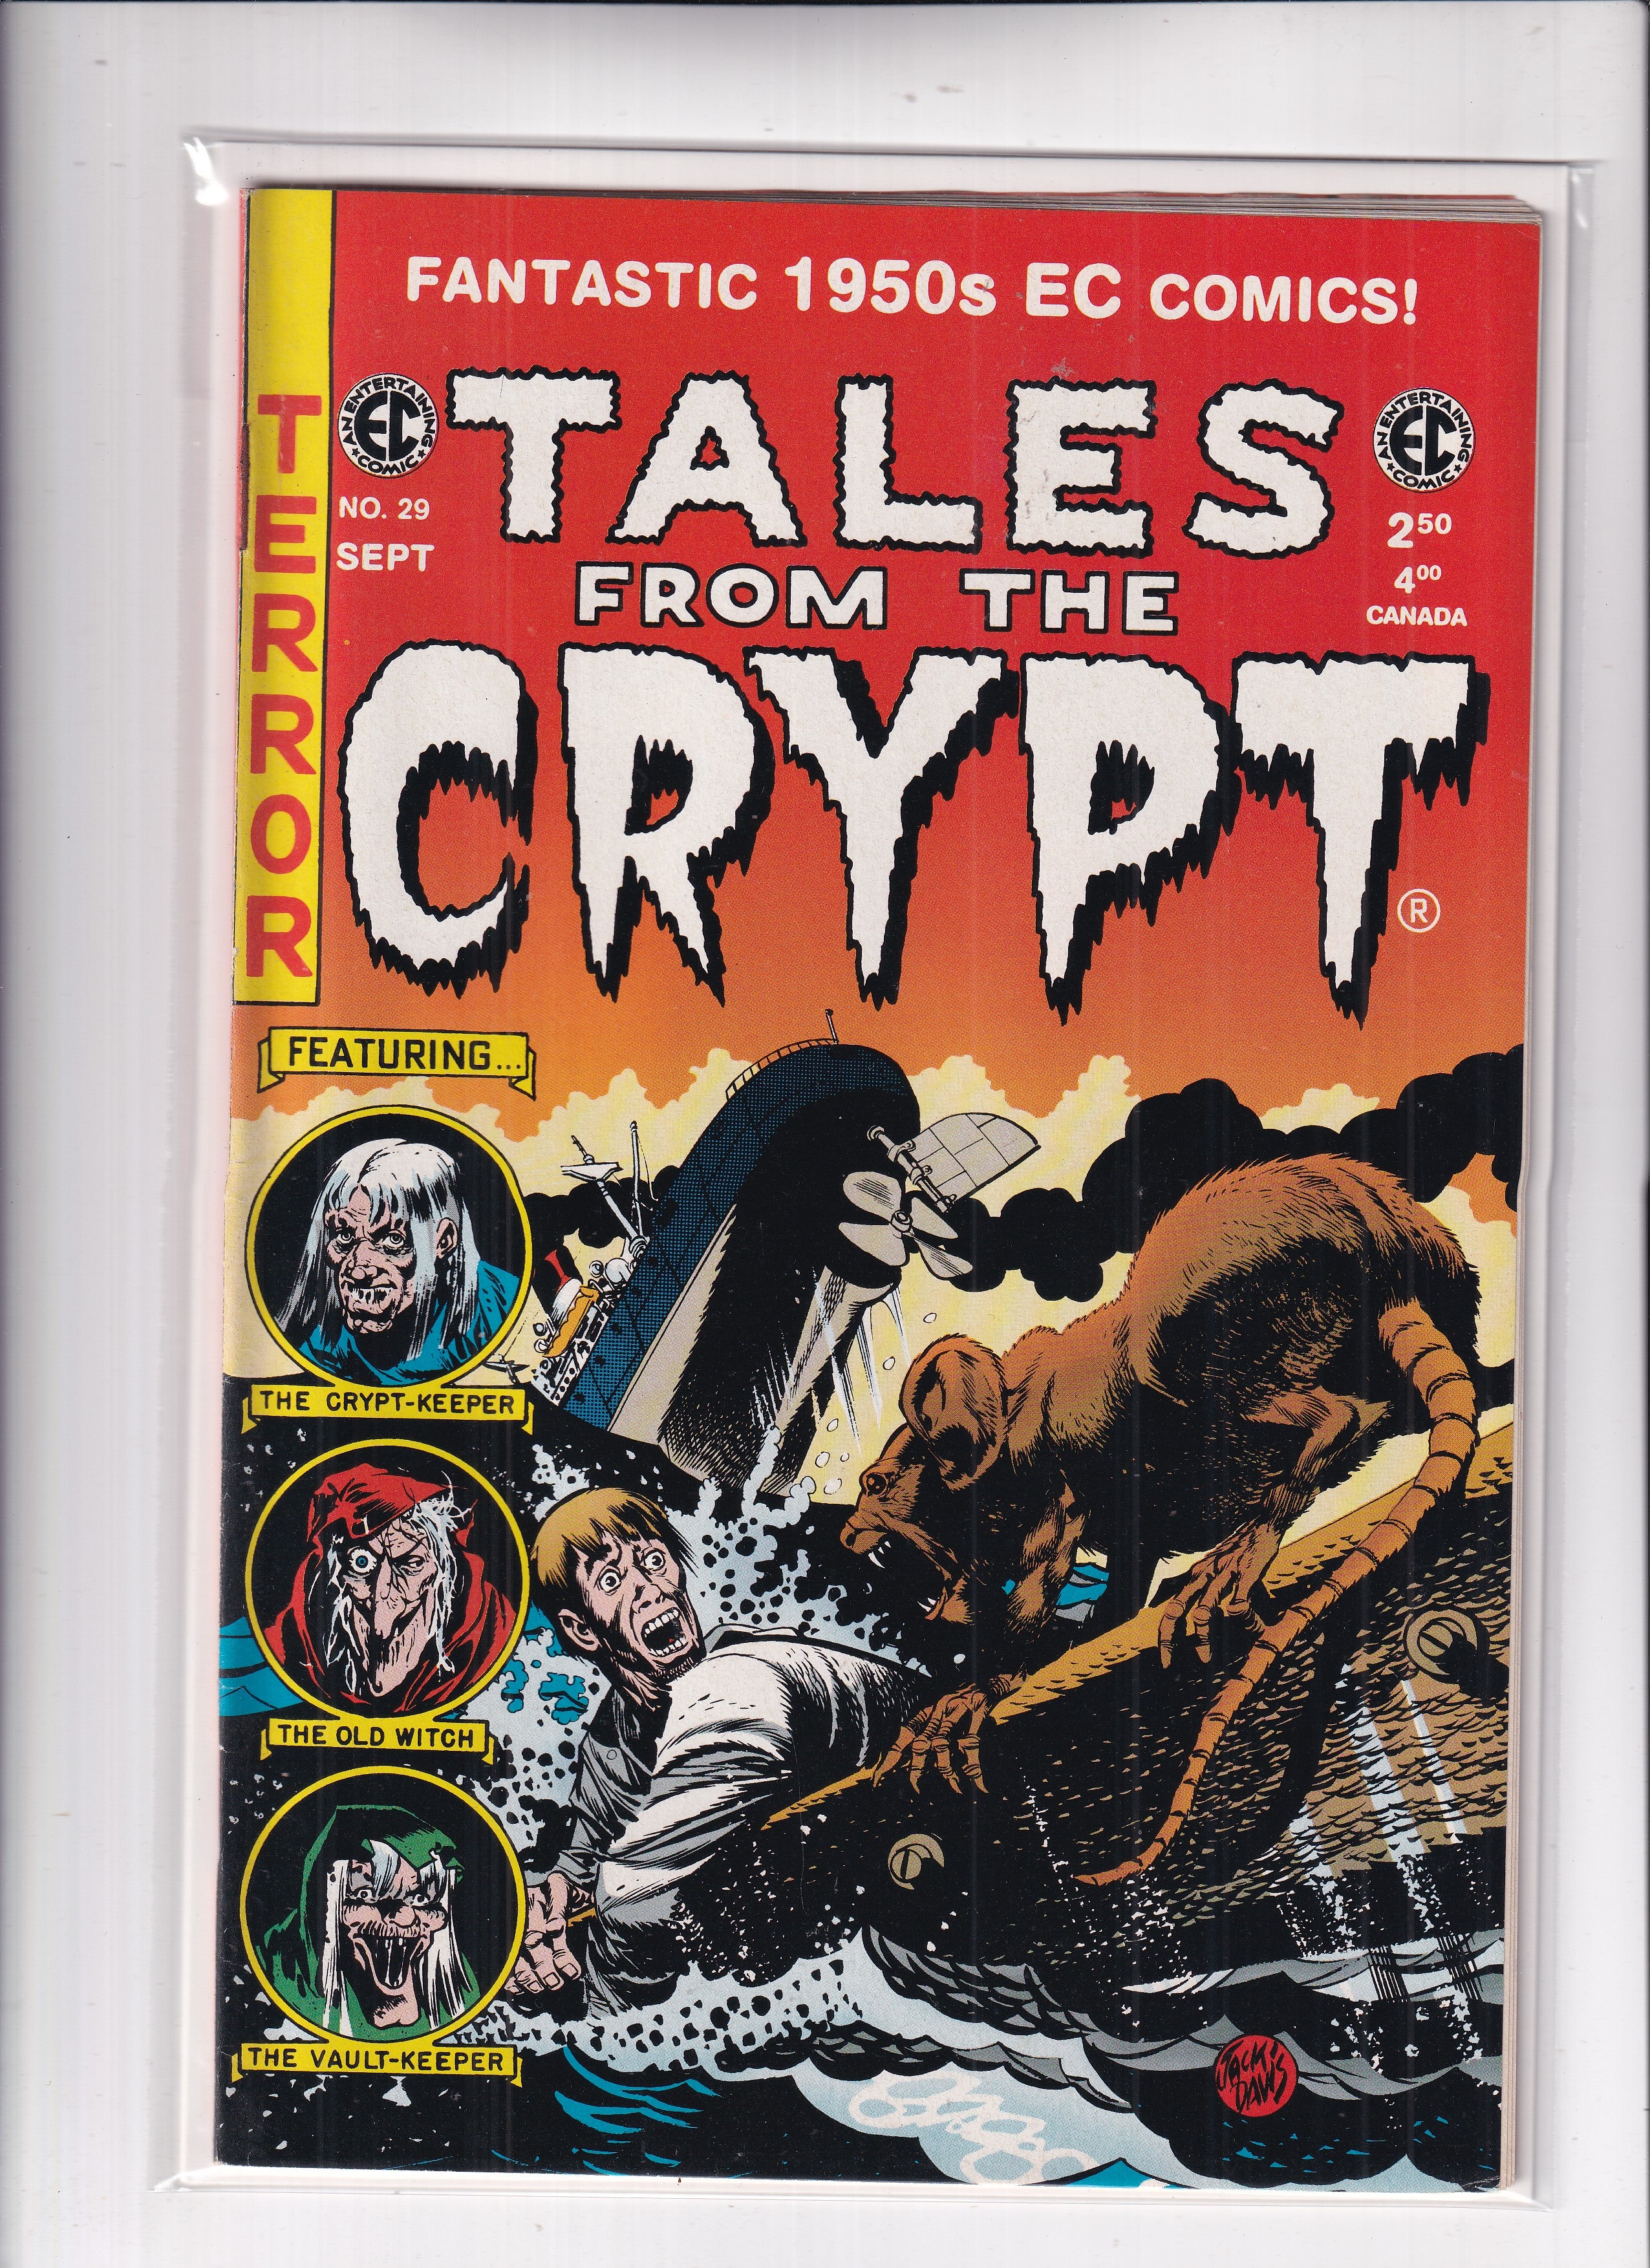 TALES FROM THE CRYPT #29 EC REPRINT - Slab City Comics 